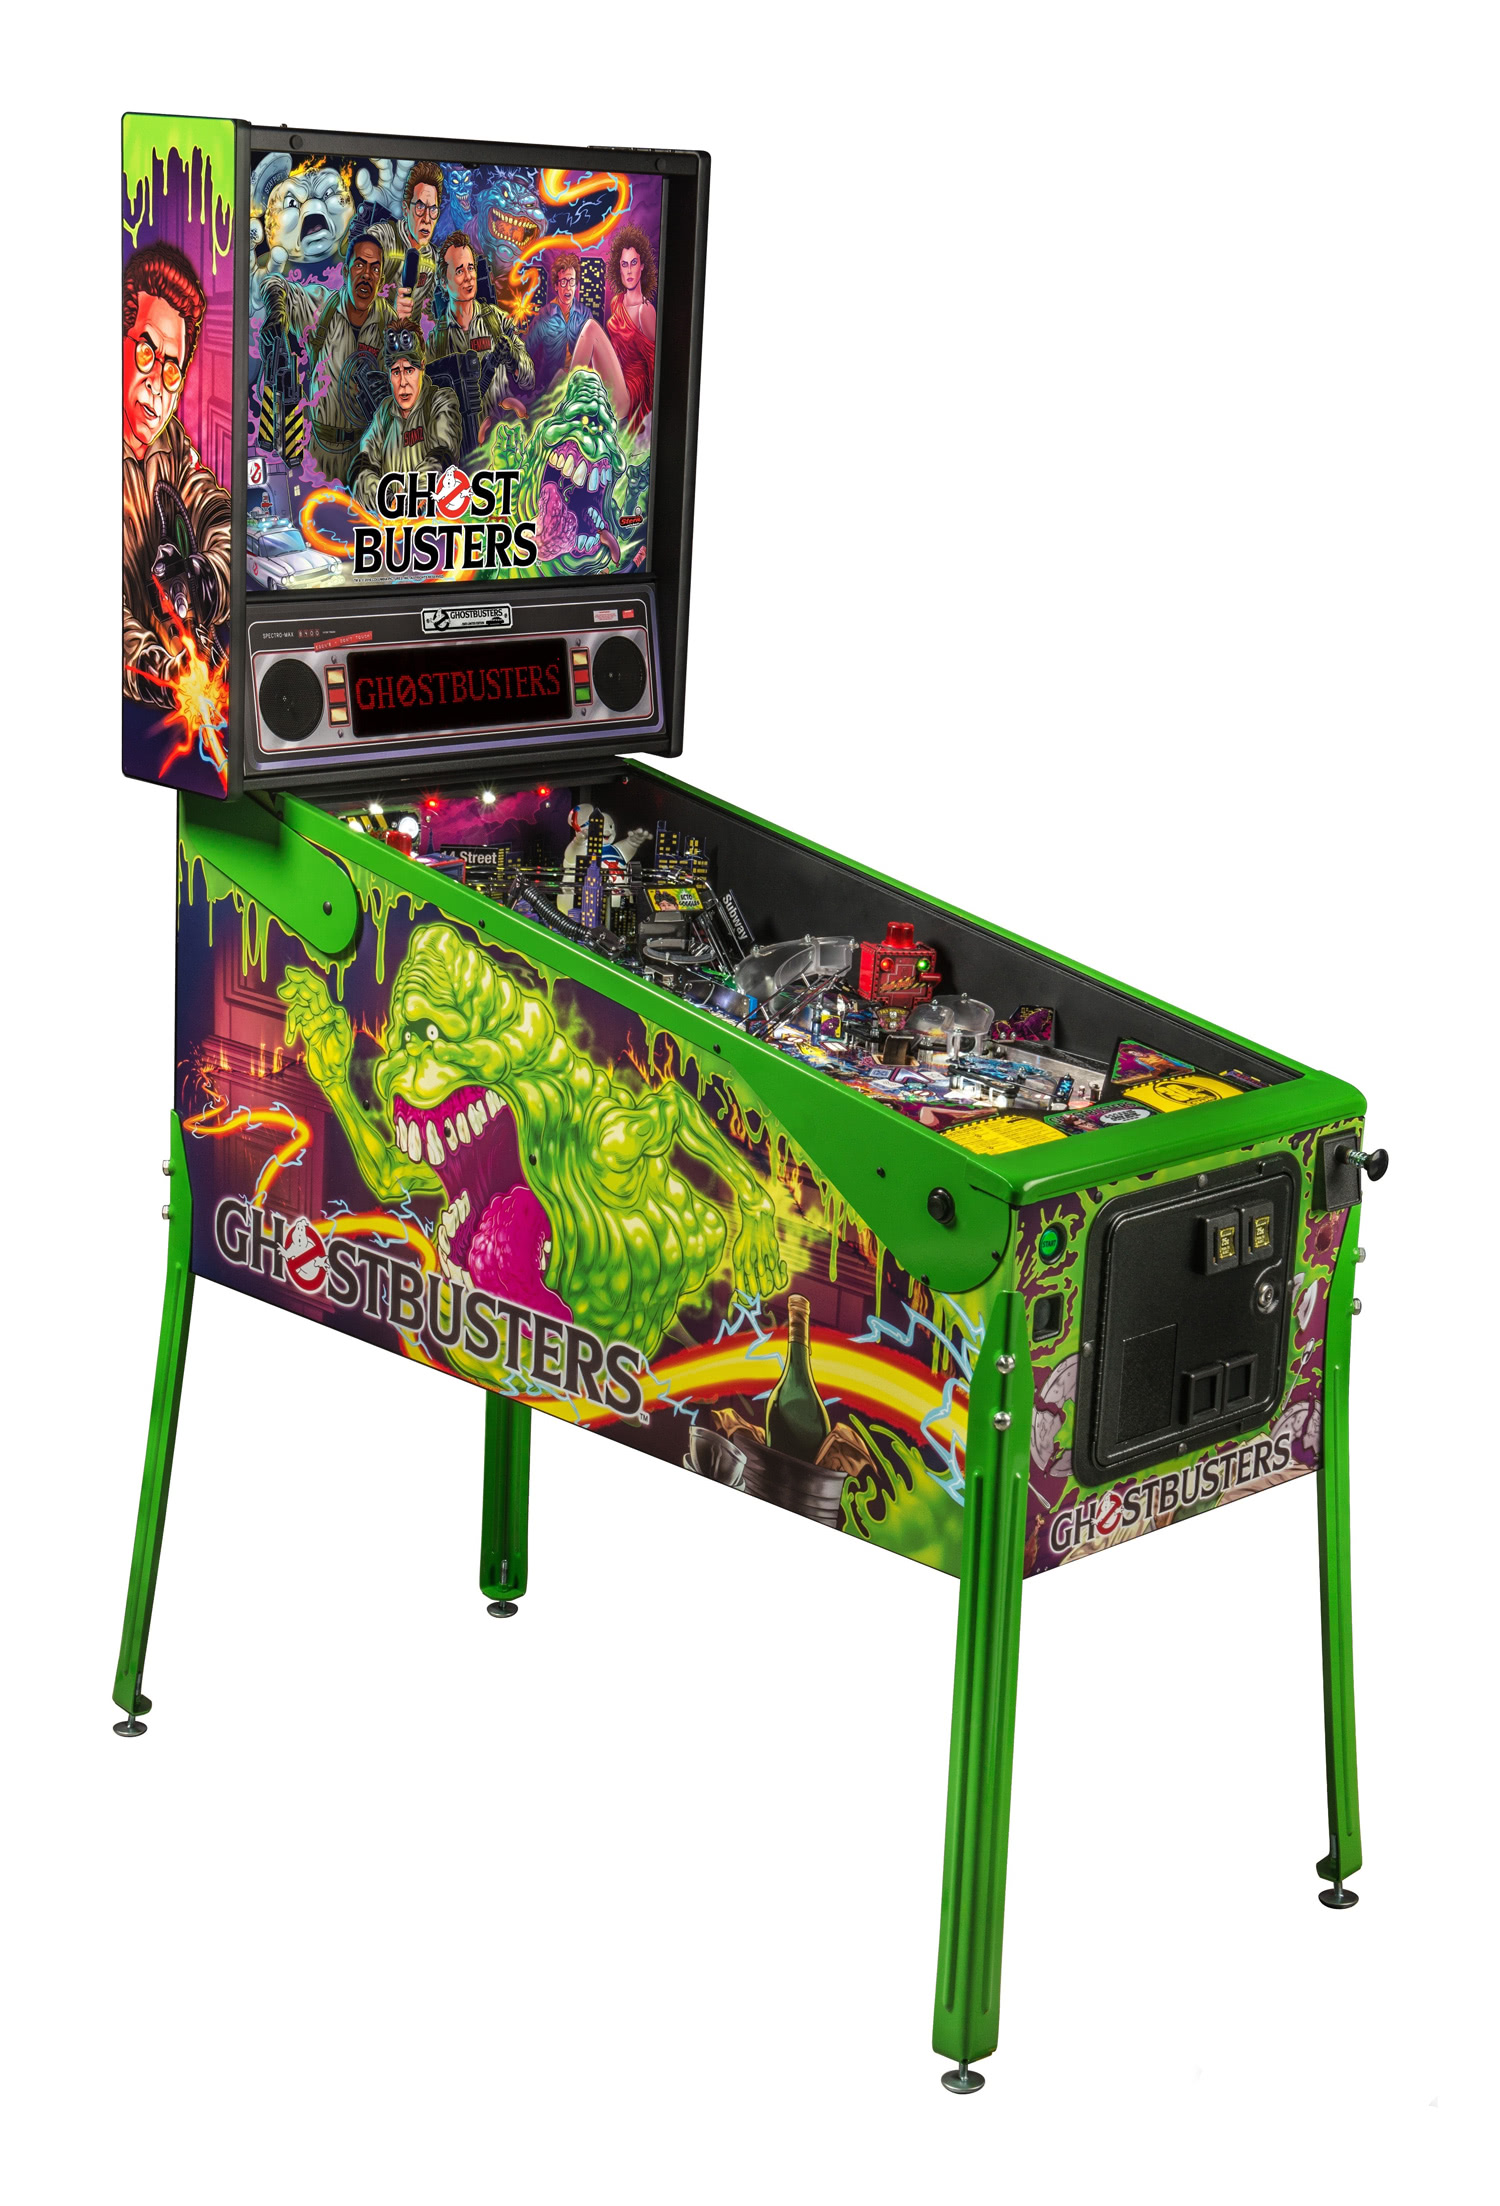 ghostbusters pinball machine